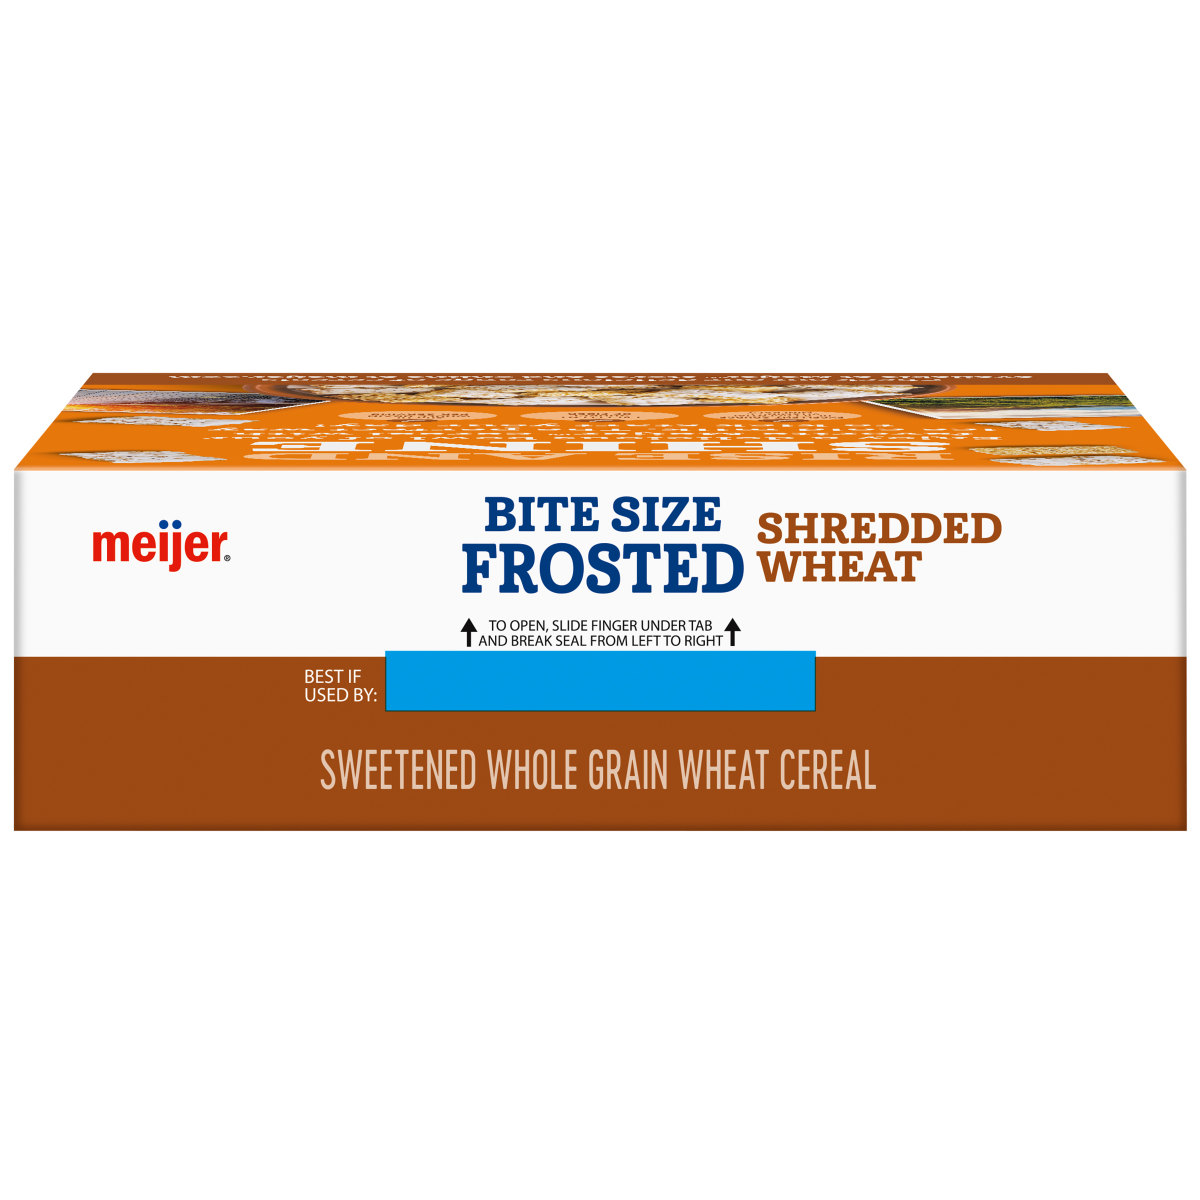 slide 18 of 29, Meijer Bite Sized Frosted Shredded Wheat Cereal, 18 oz